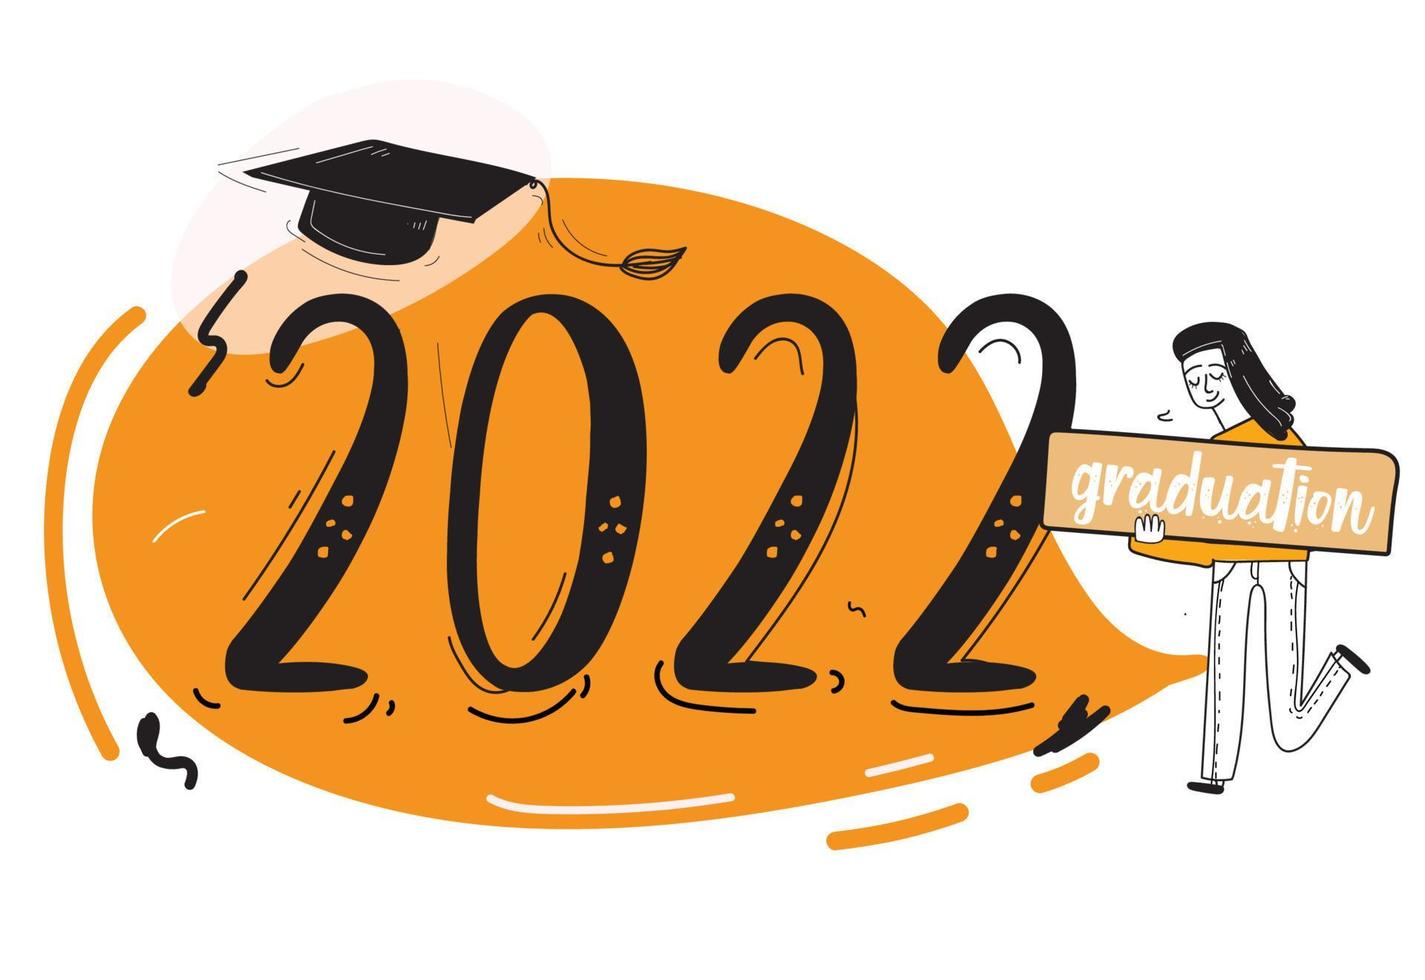 2022 graduation day vector